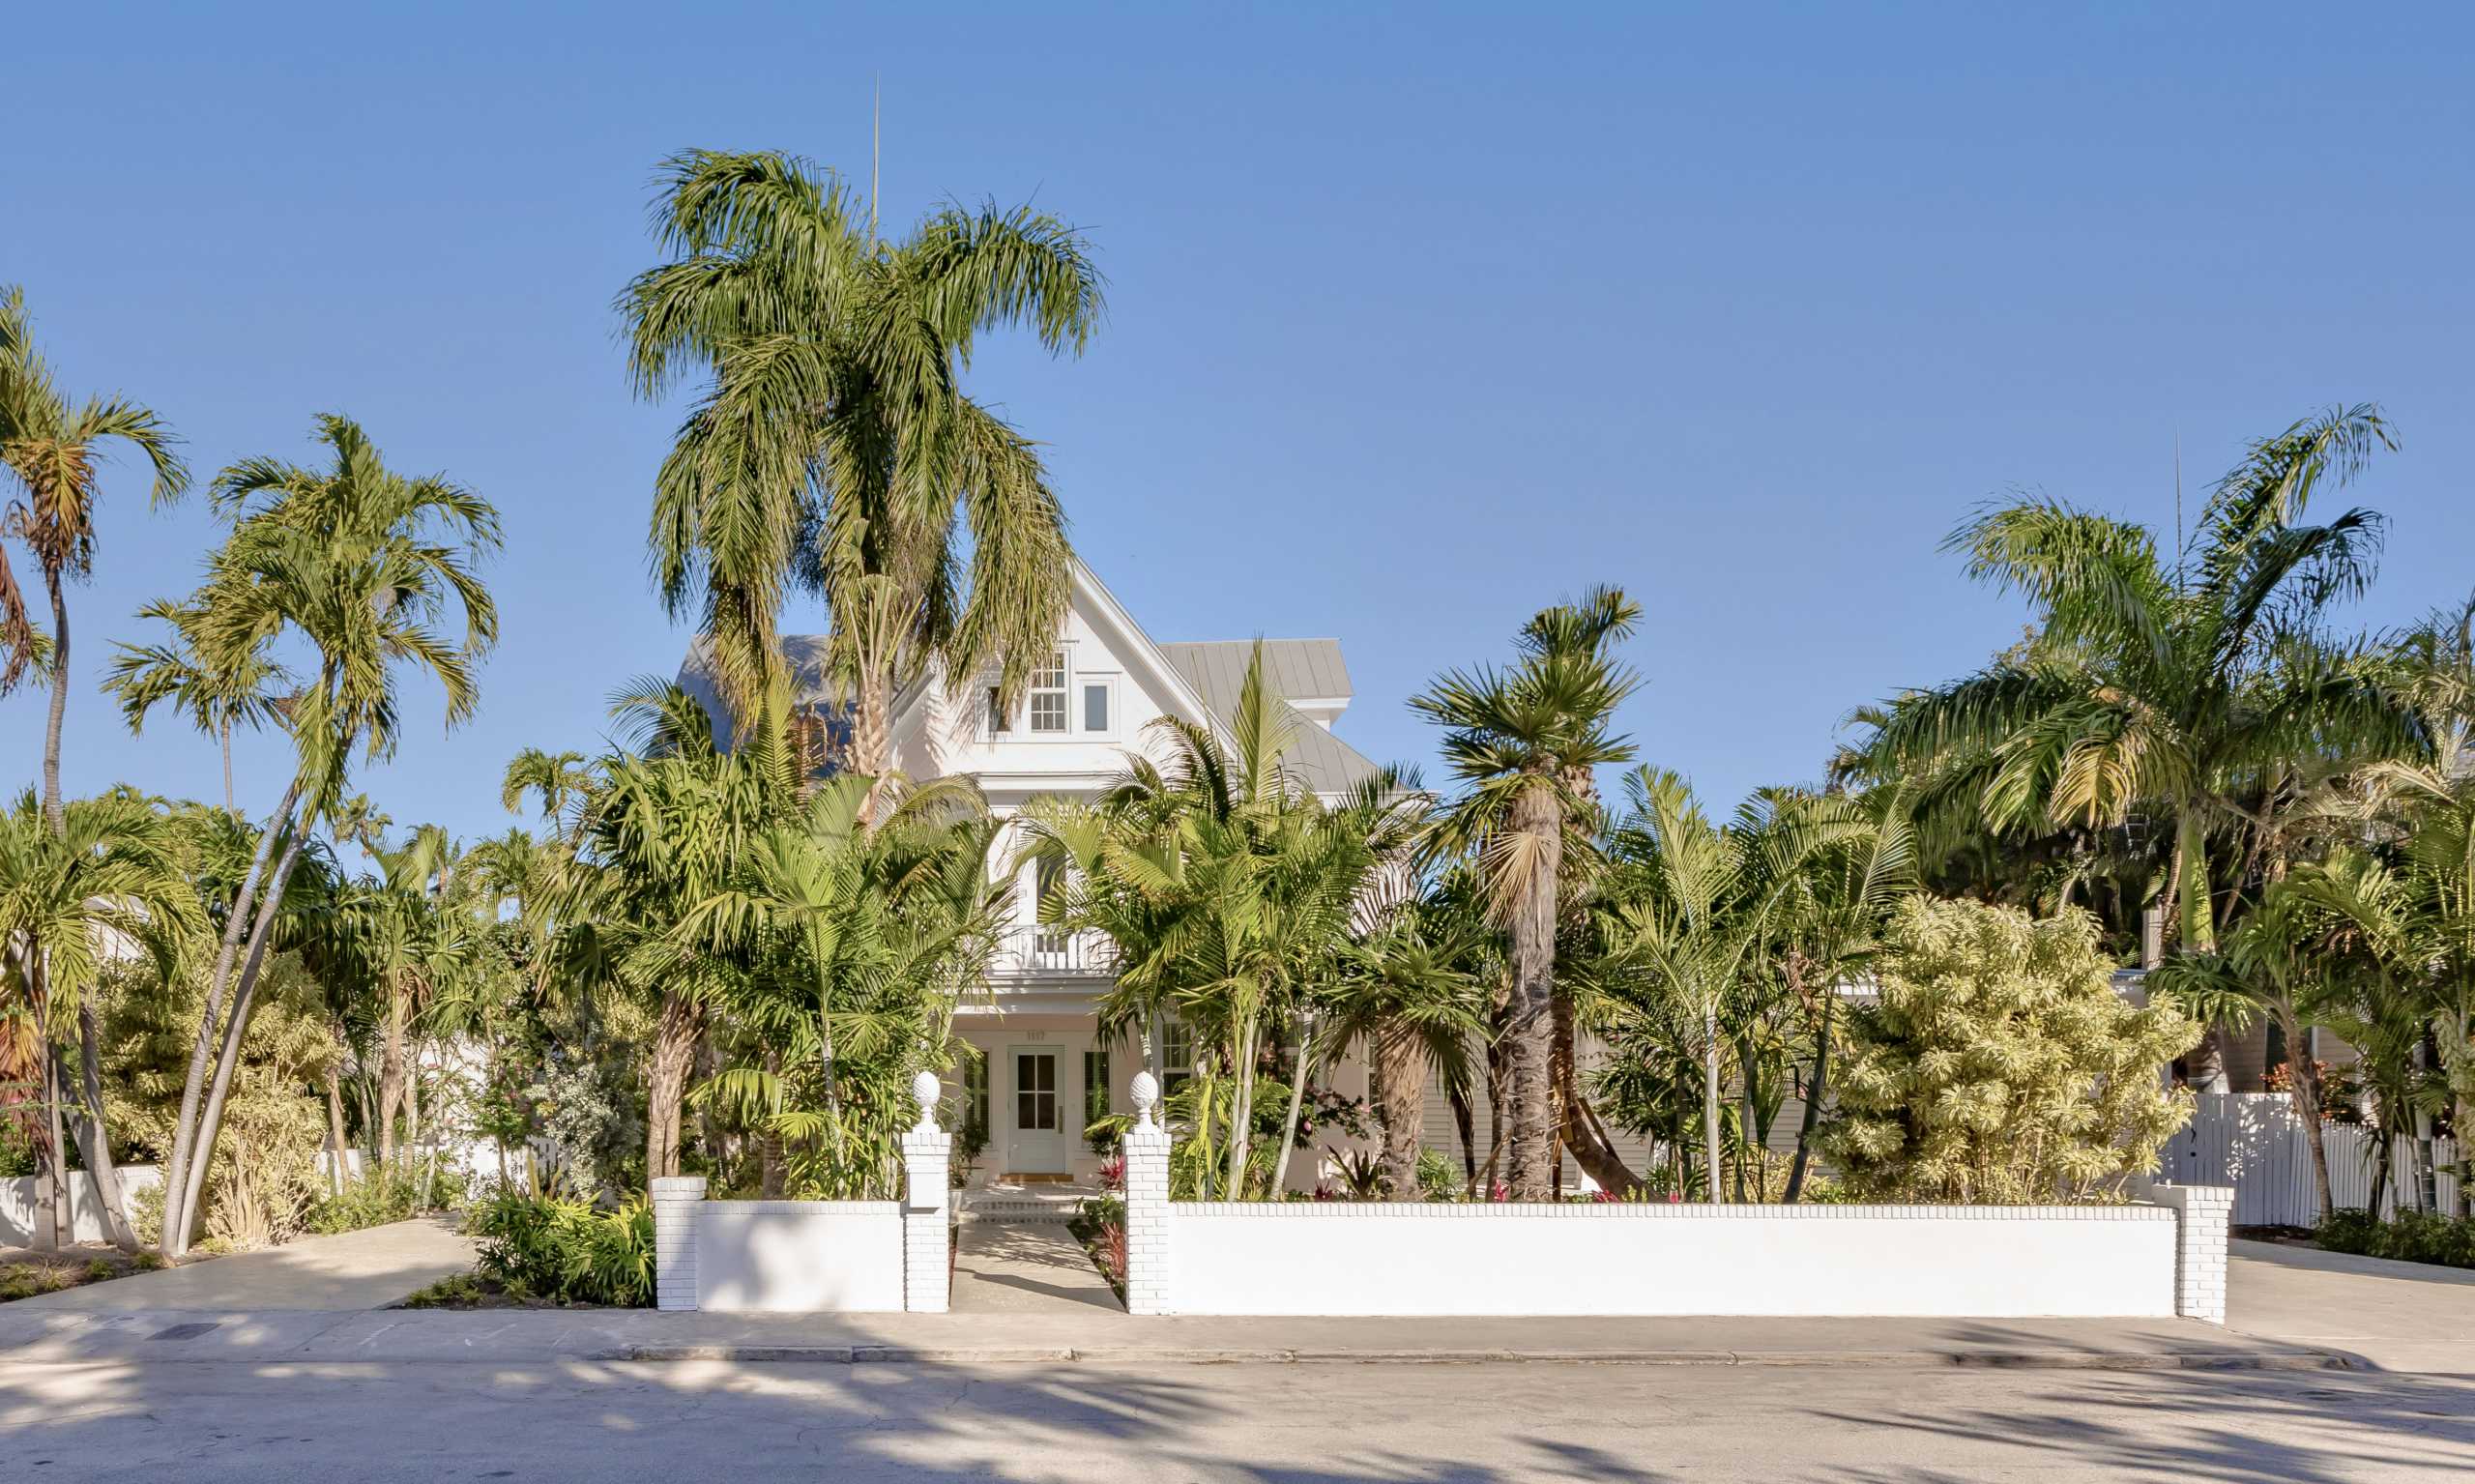 Price Reduced $170,000 - Luxurious Key West Landmark Home